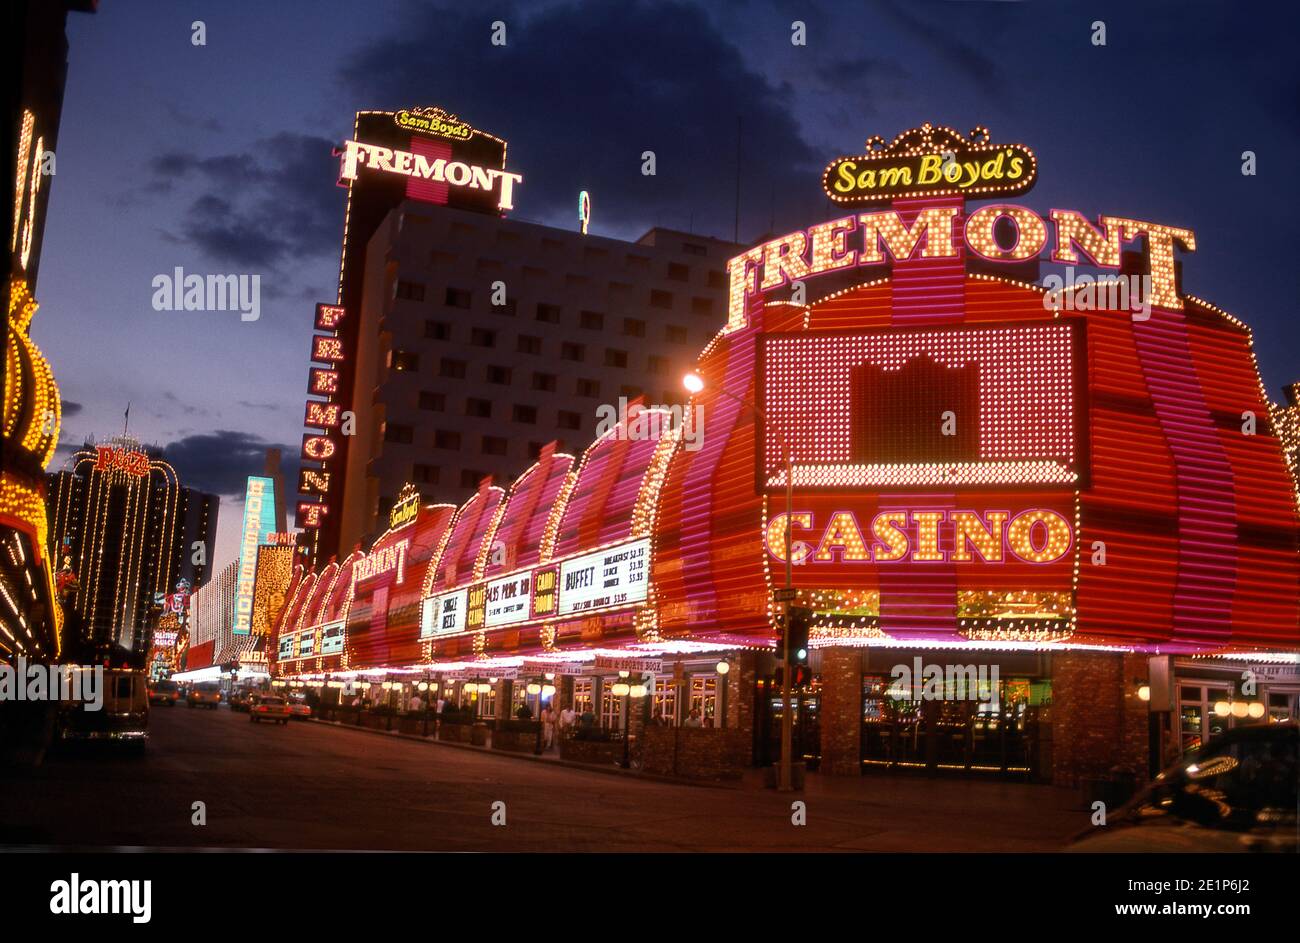 Sam Boyd's Fremont Casino on Fremont Street in Downtown Las Vegas, Nevada Stock Photo